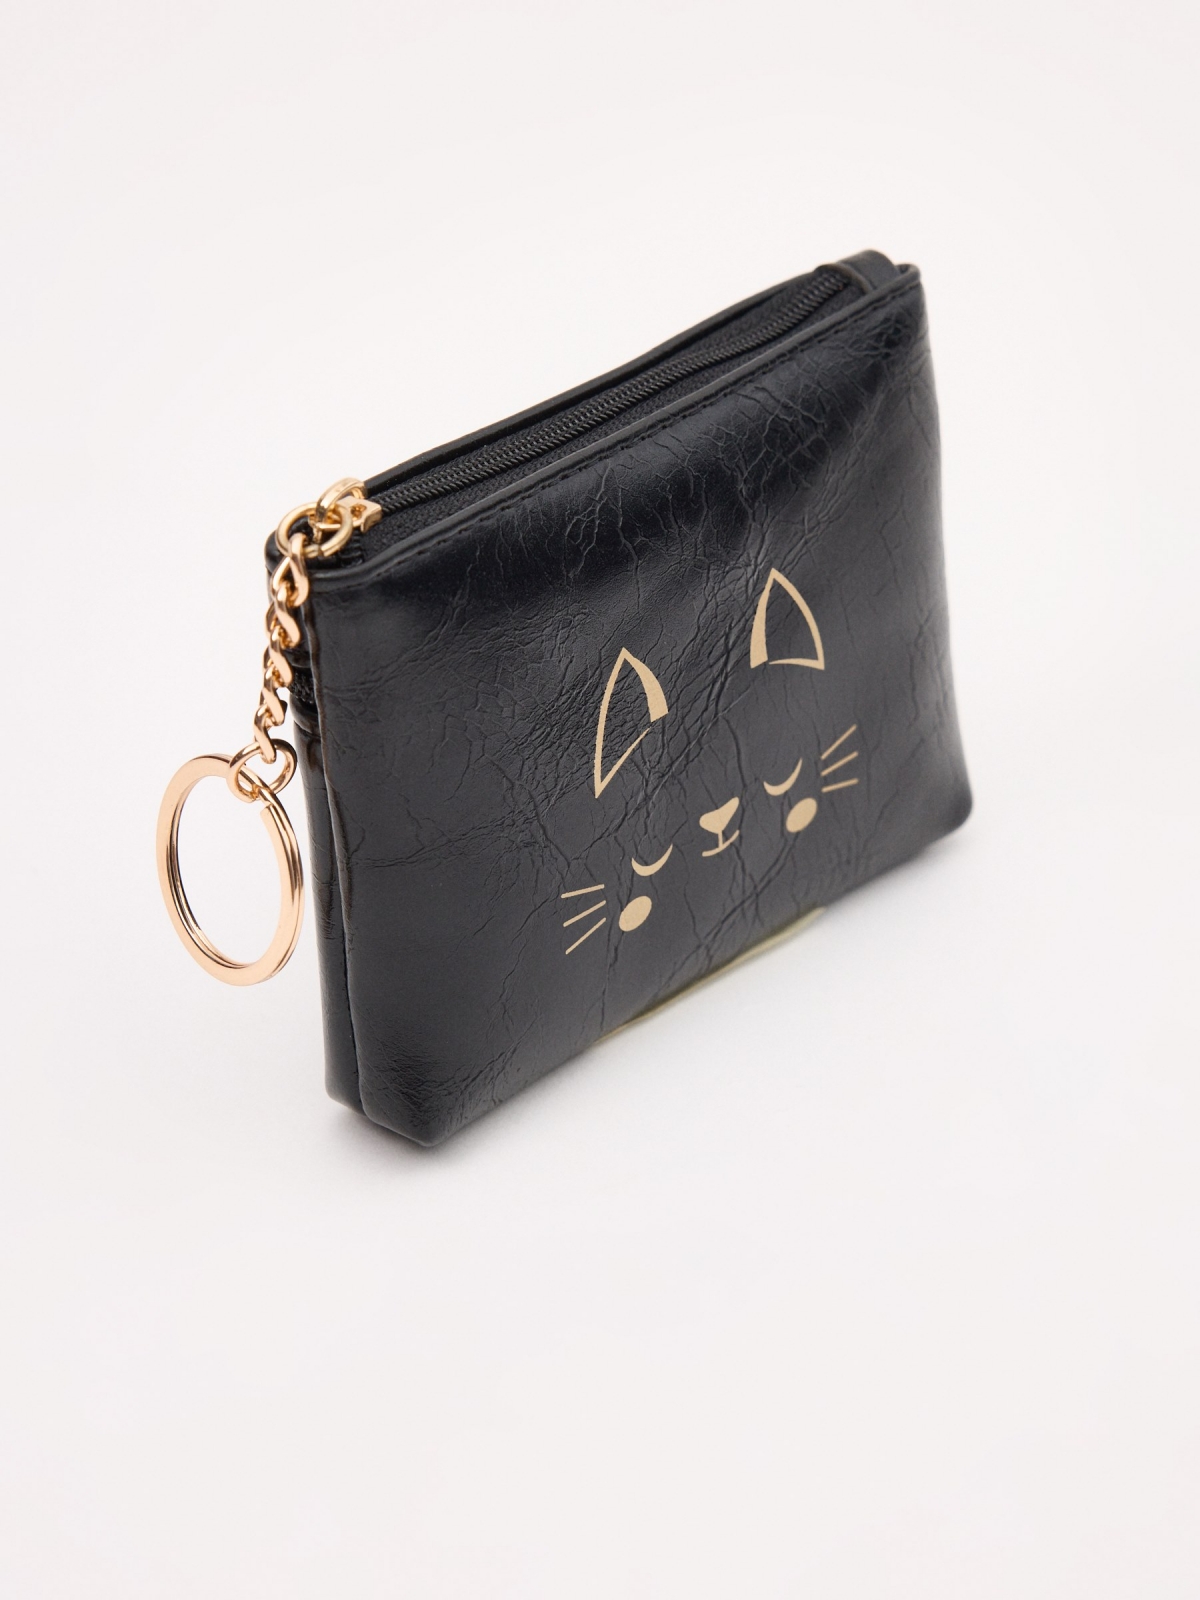 Cat print purse black back view